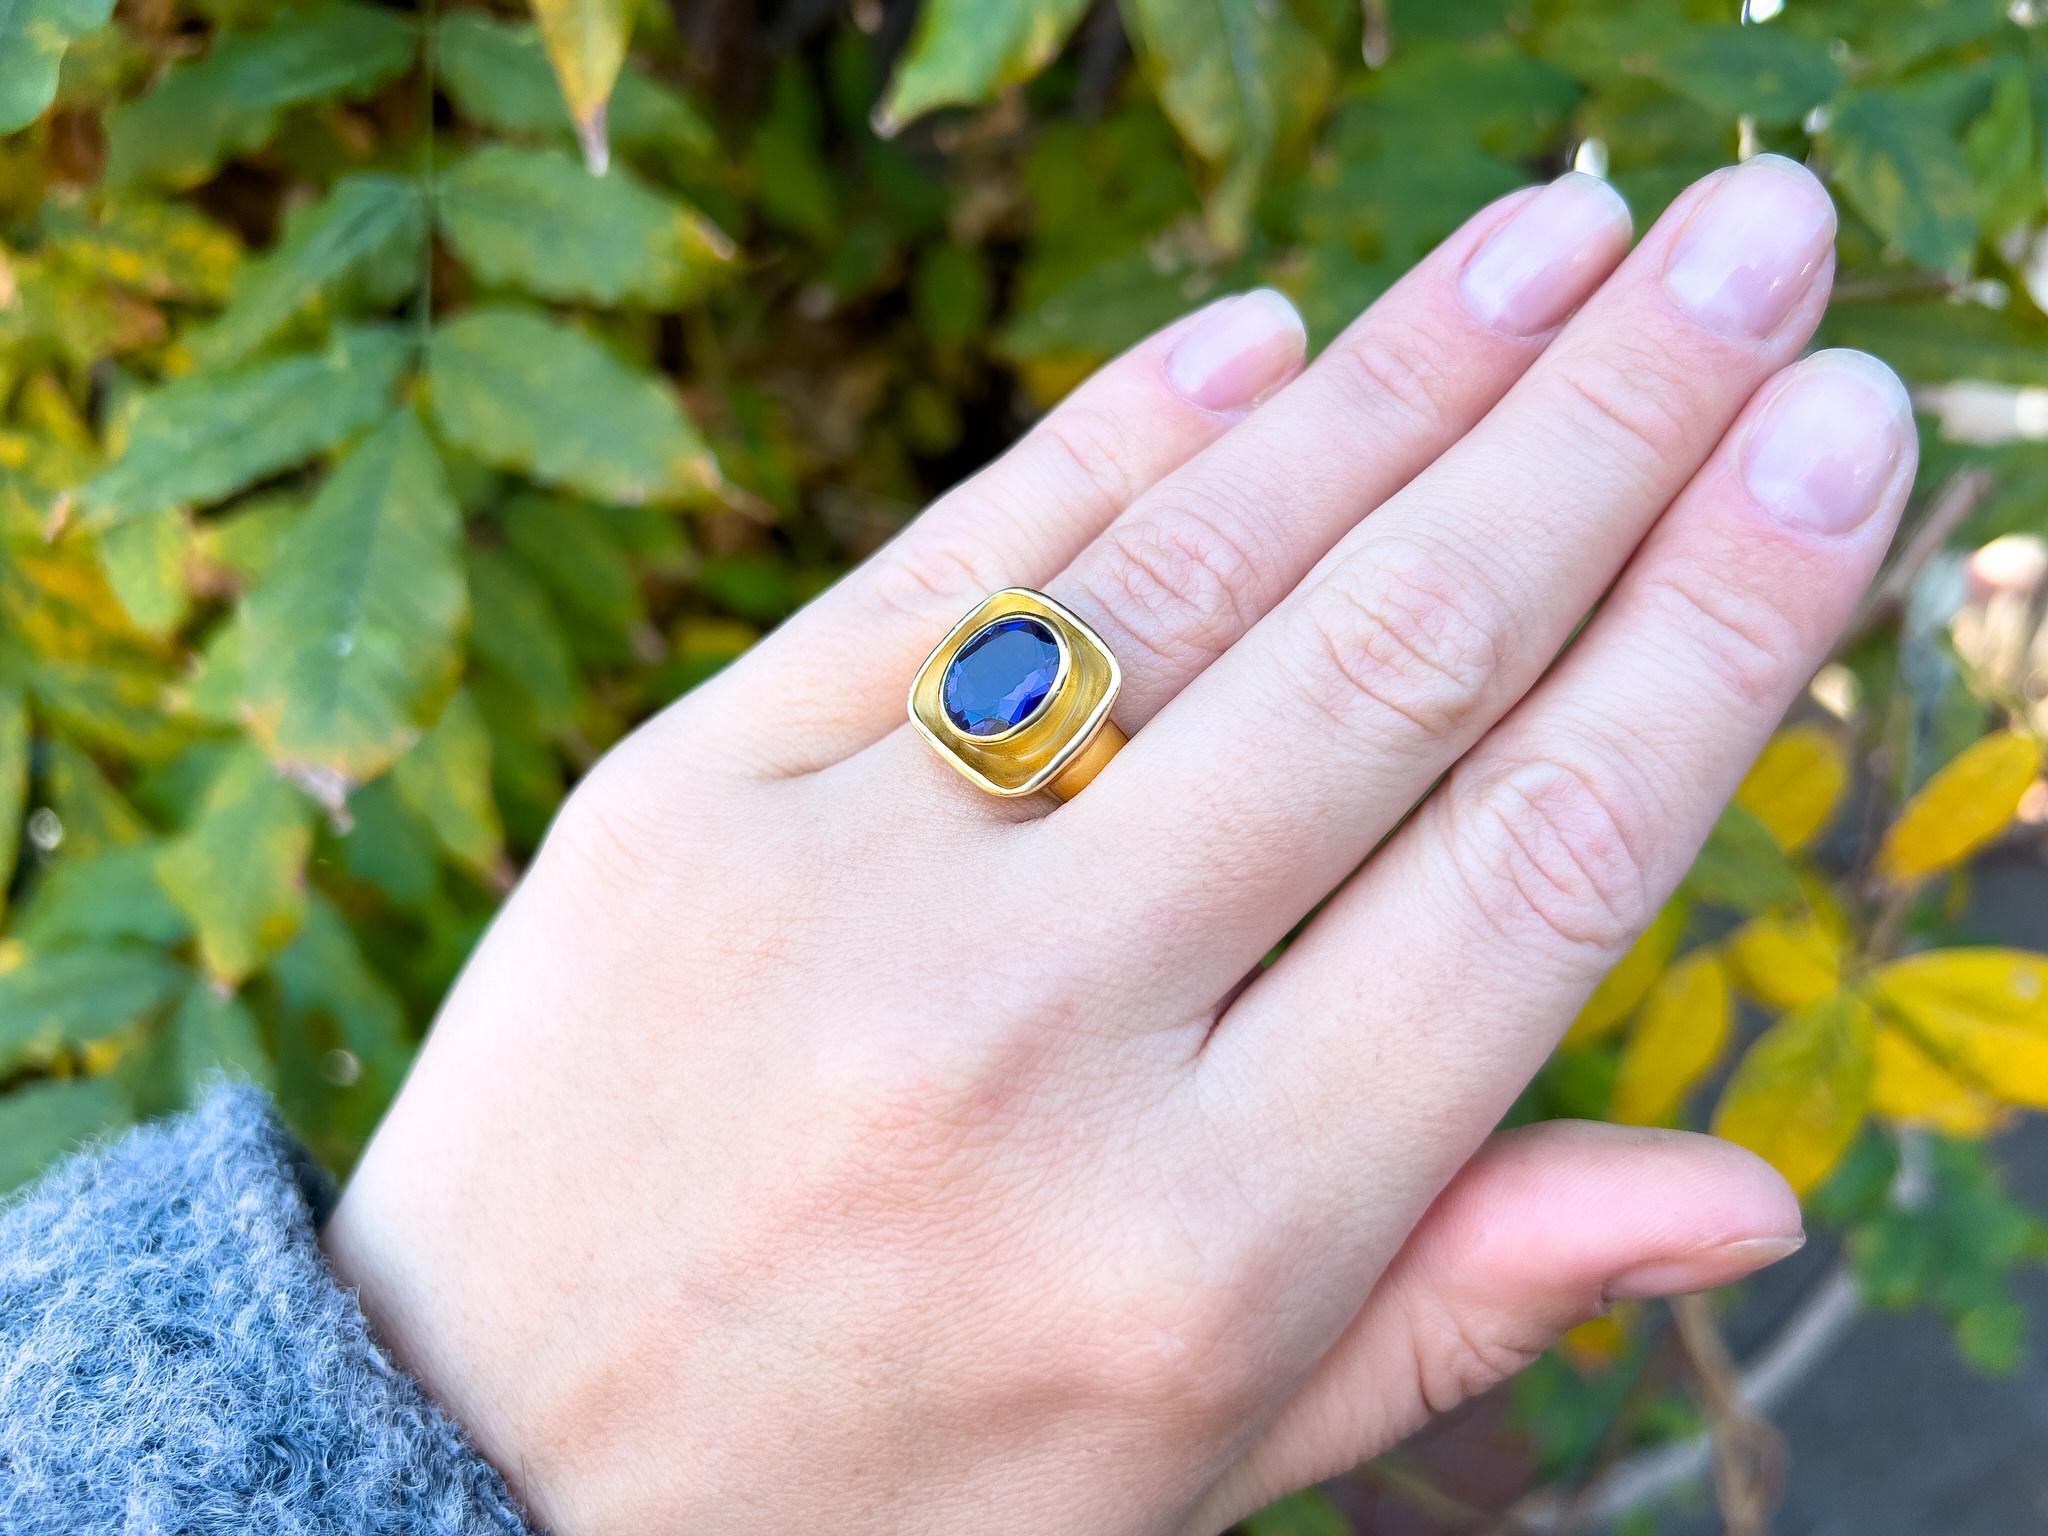 Tanzanite = 3 Carat
(Cut: Oval, Color: Blue, Origin: Natural)
Metal = 18K Yellow Gold
Ring Size = 7